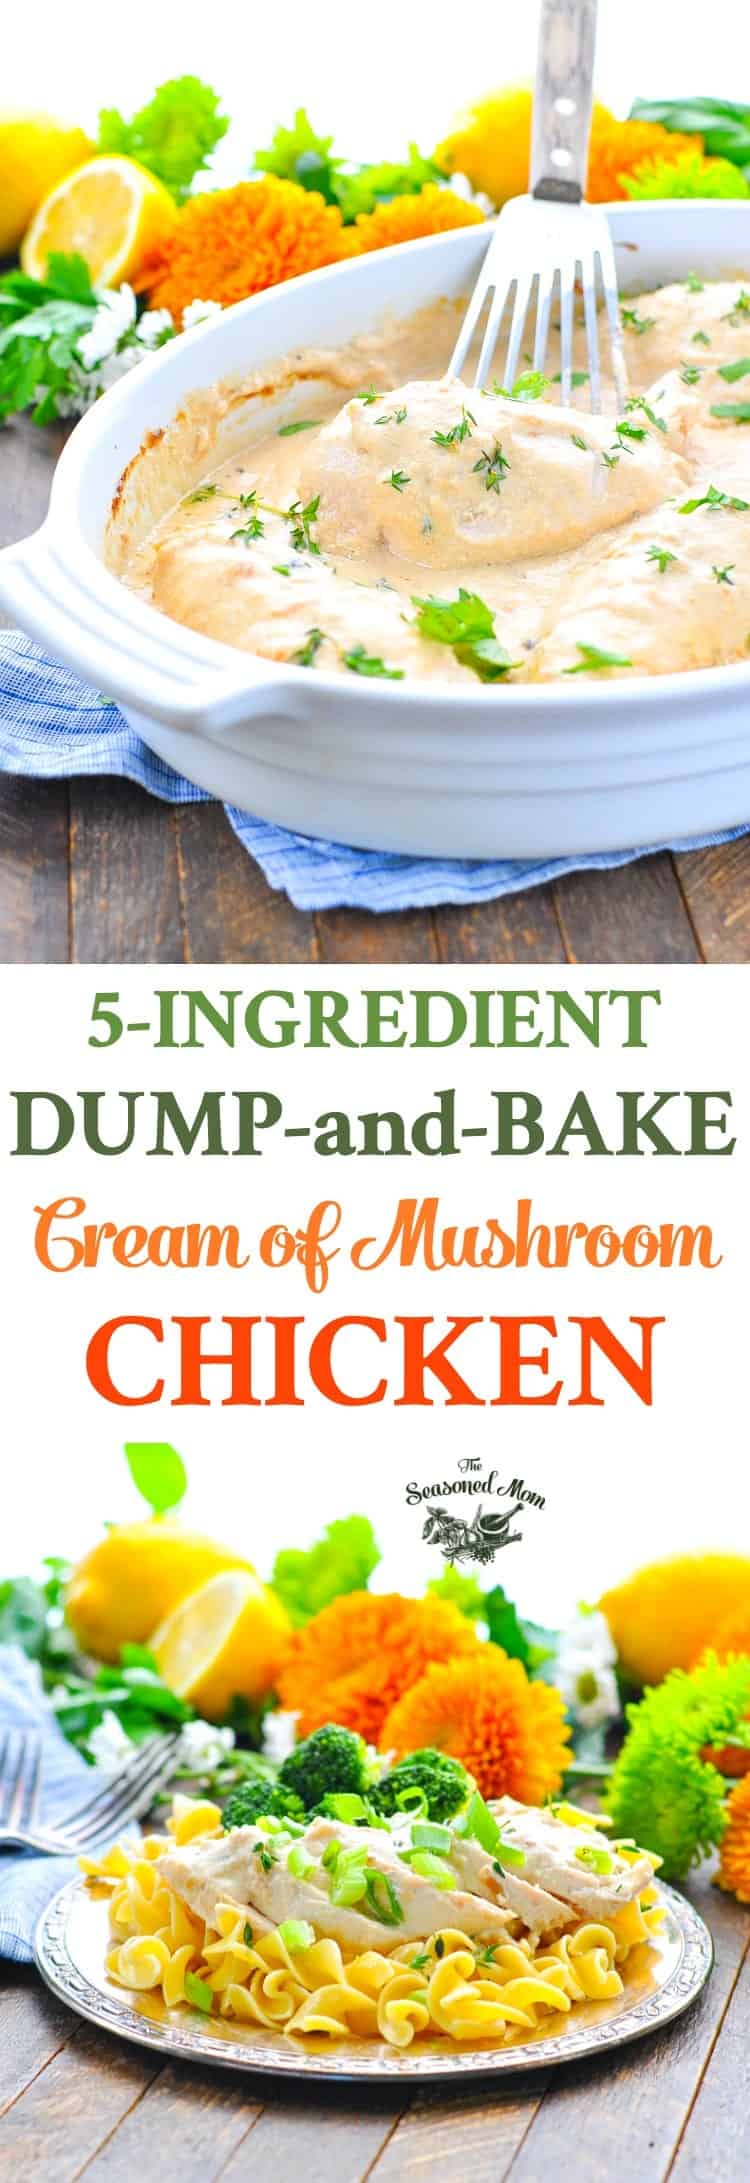 Dump-and-Bake Cream of Mushroom Chicken - The Seasoned Mom